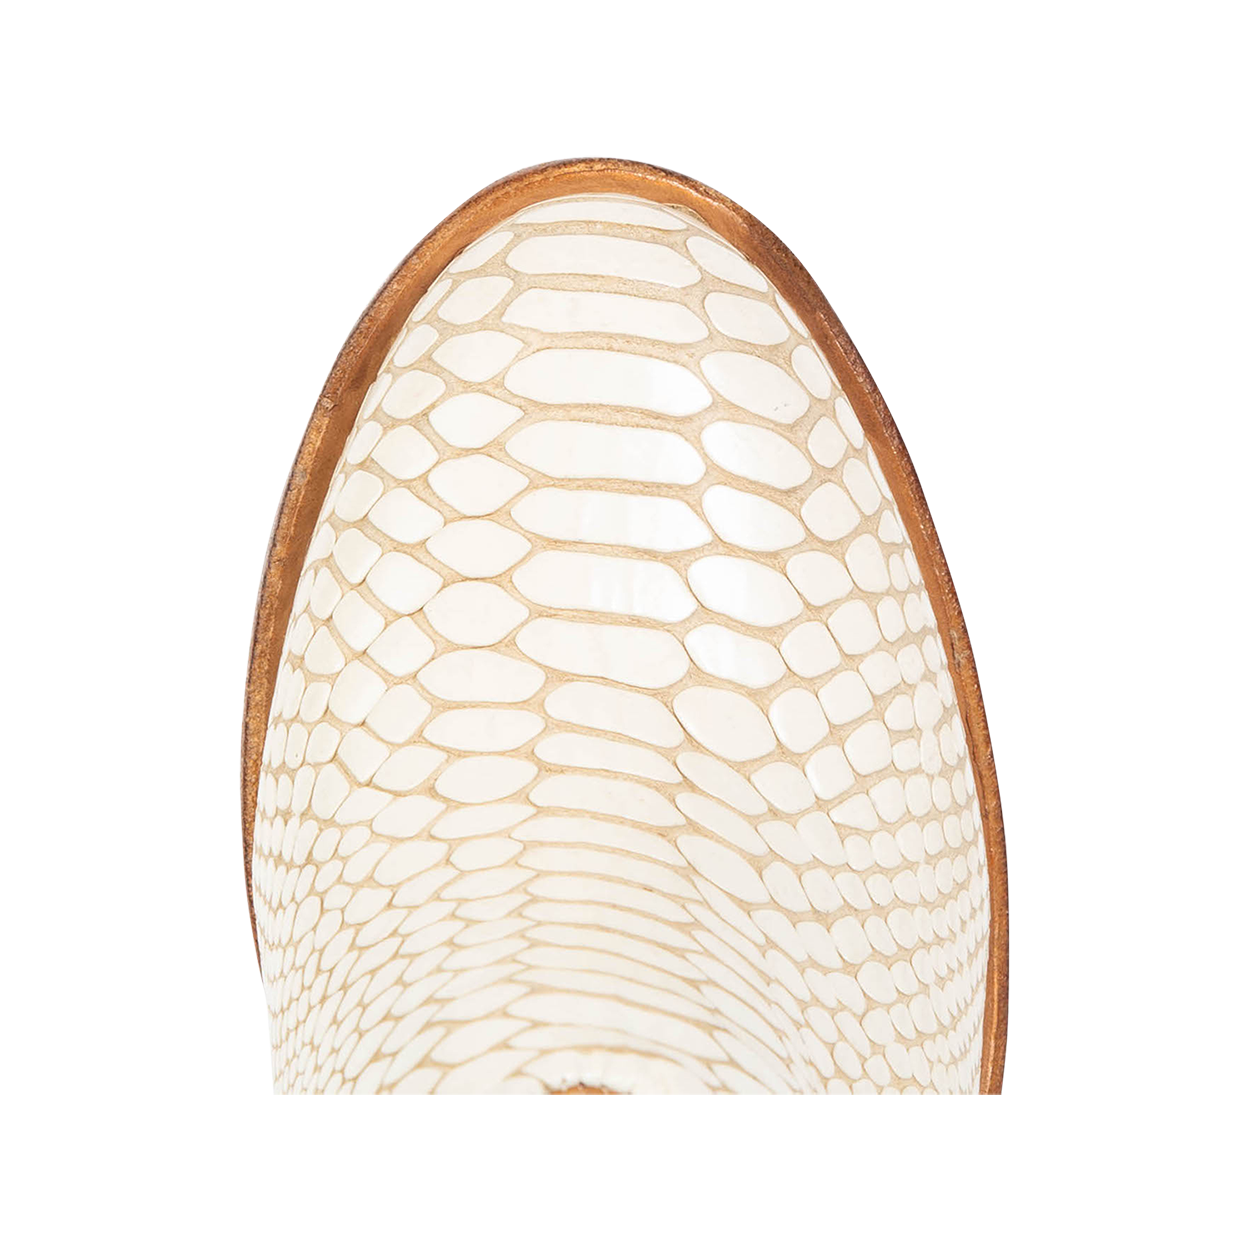 Top view showing round toe on FREEBIRD women's Detroit white snake bootie